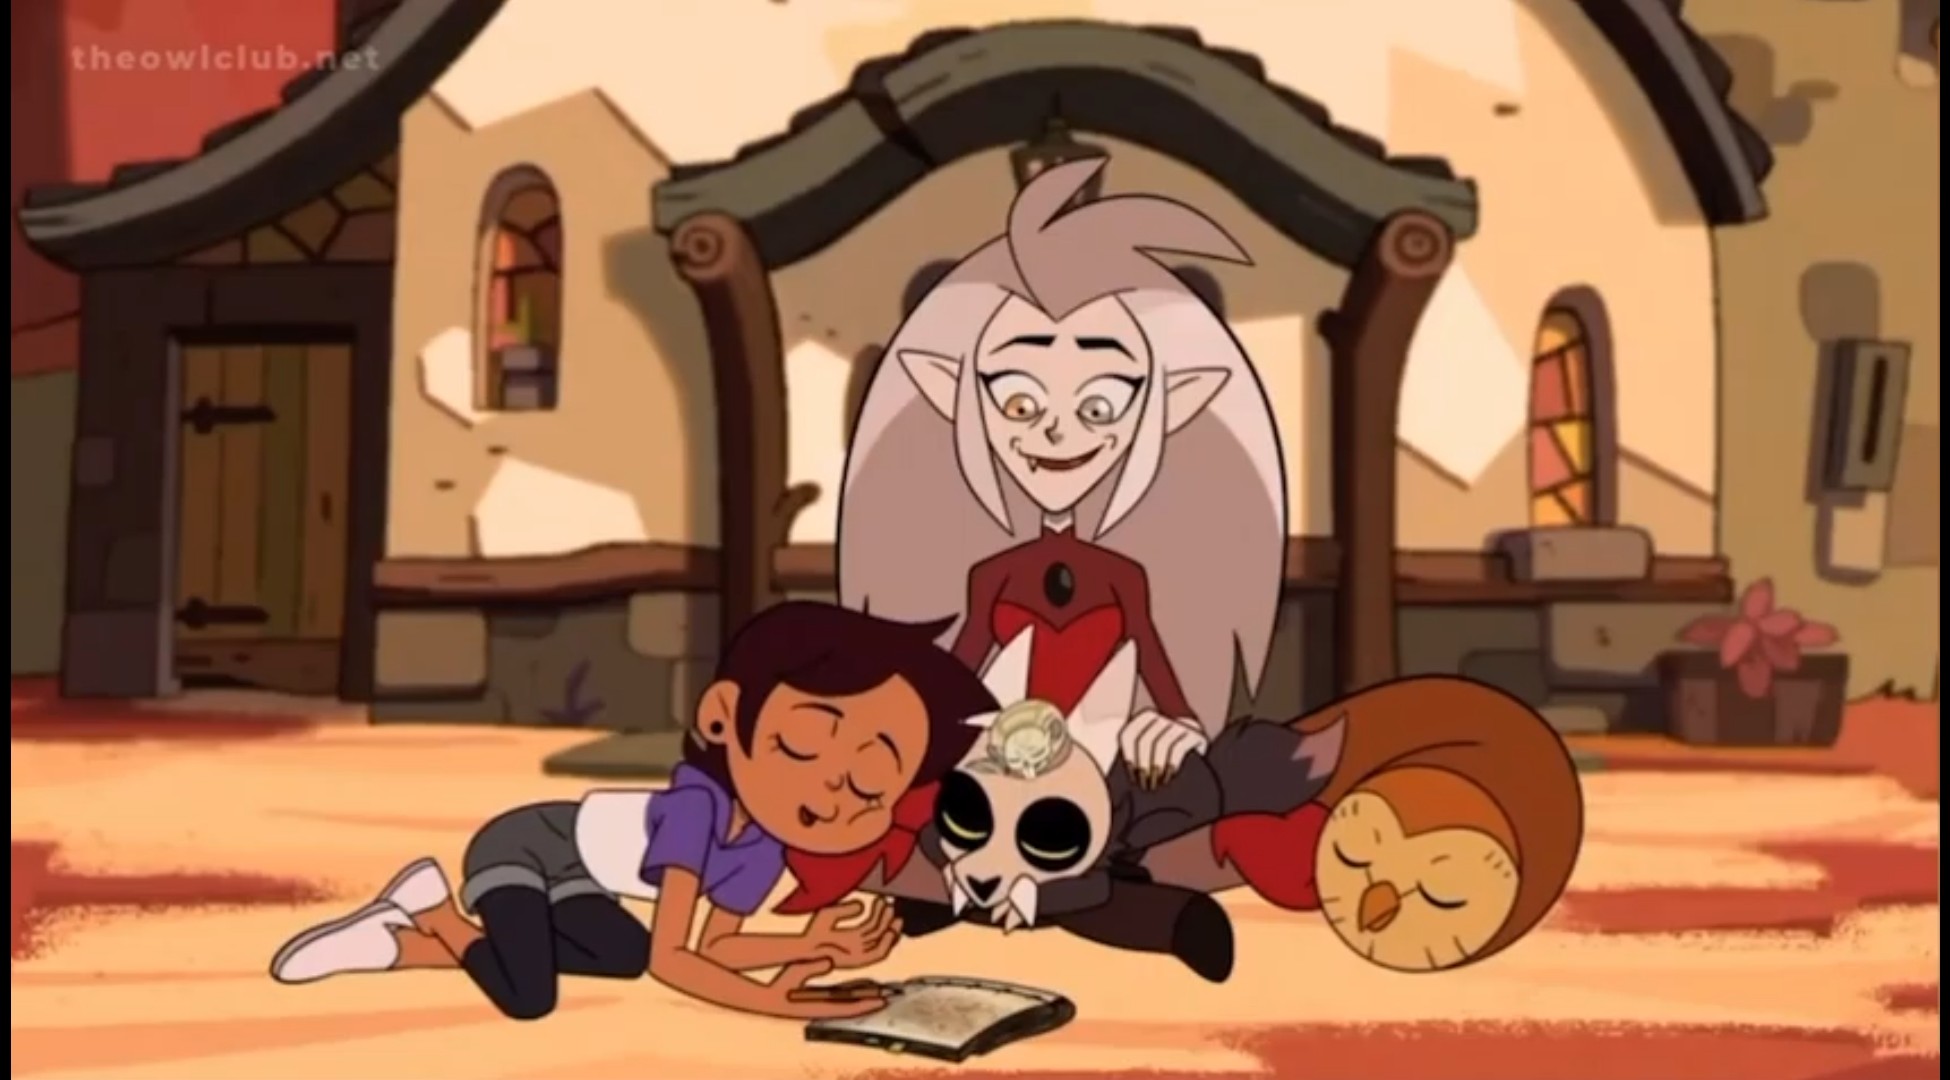 Luz, Eda, and King (The Owl House Season 2) by AnimeToon95 on DeviantArt